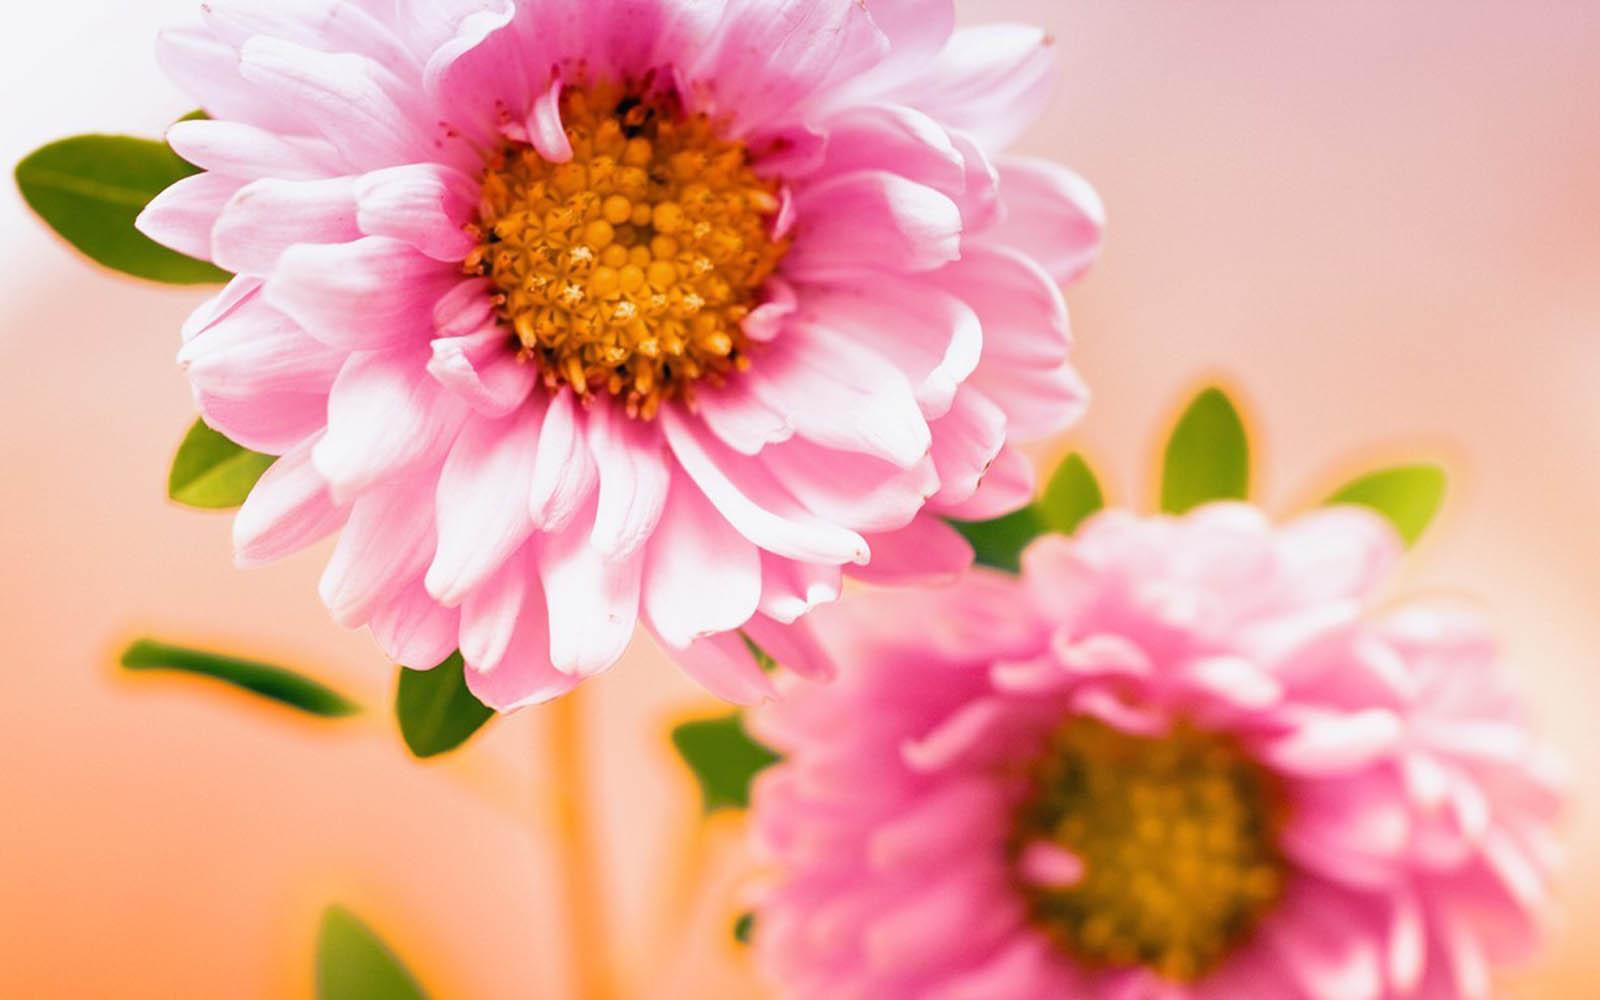 Gambar-Gambar Bunga Berwarna Merah Muda | Wallpapersforfree